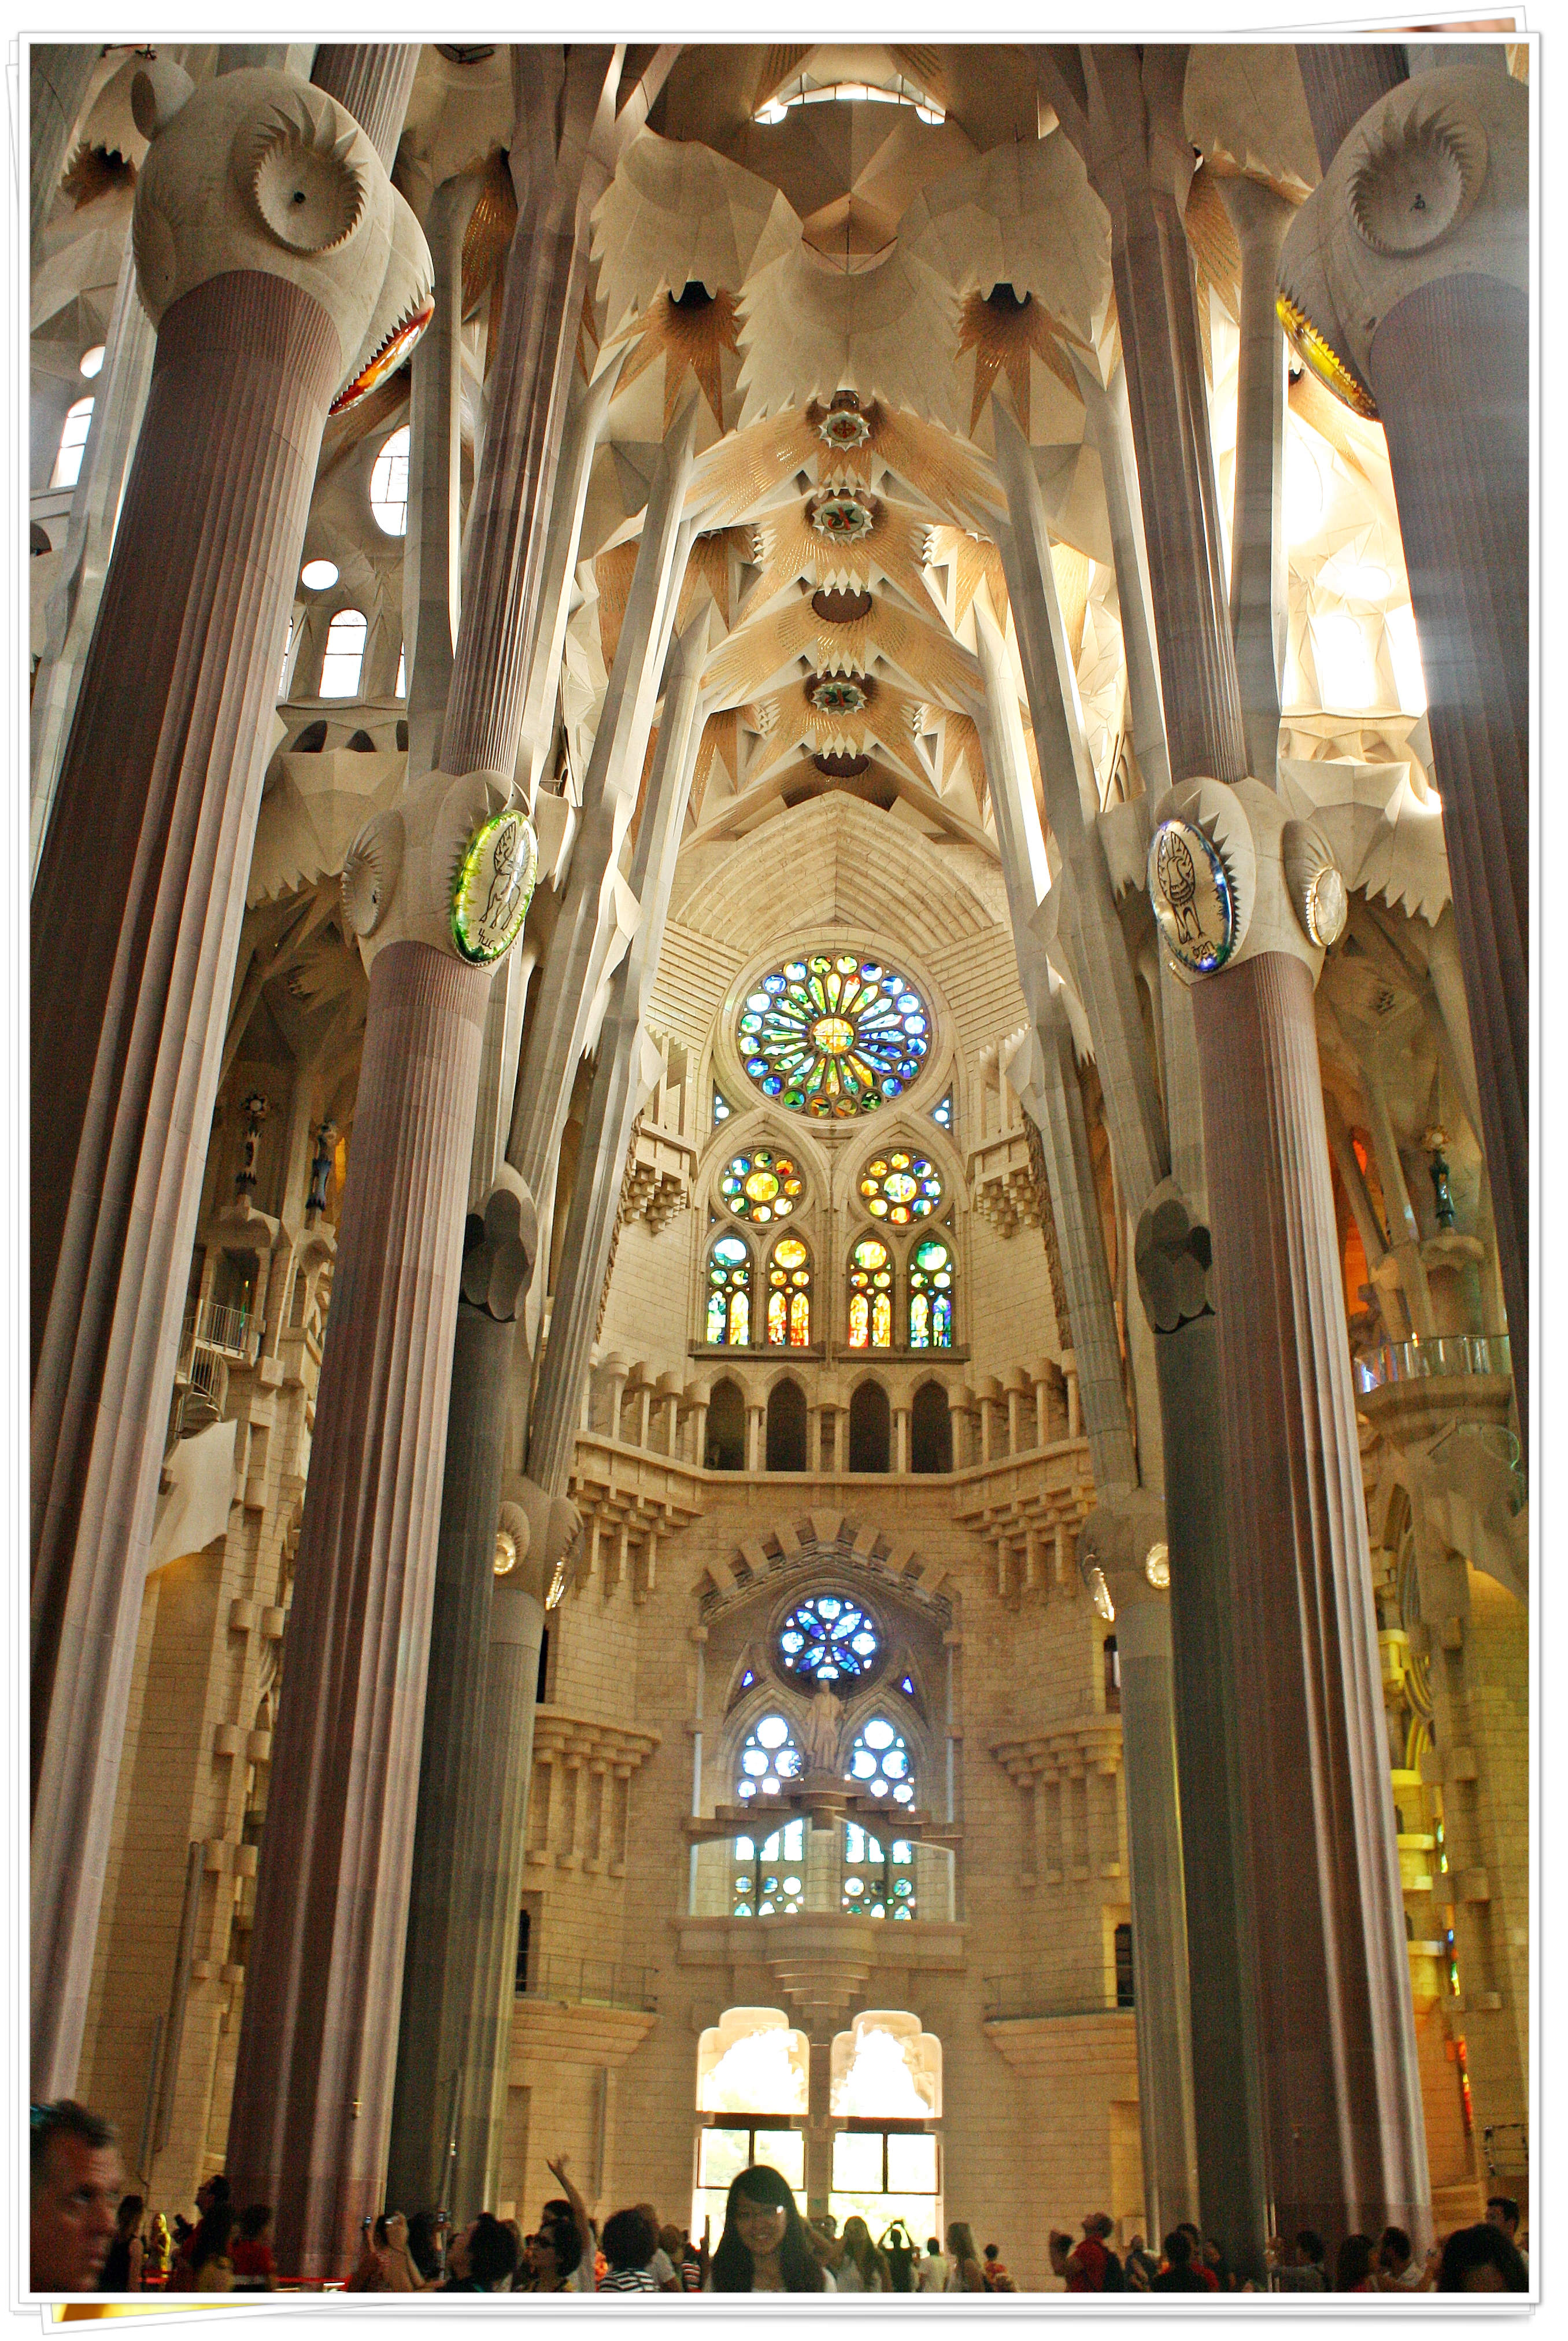 Basilica de la Sagrada Familia - Barcelona, Spain 2013